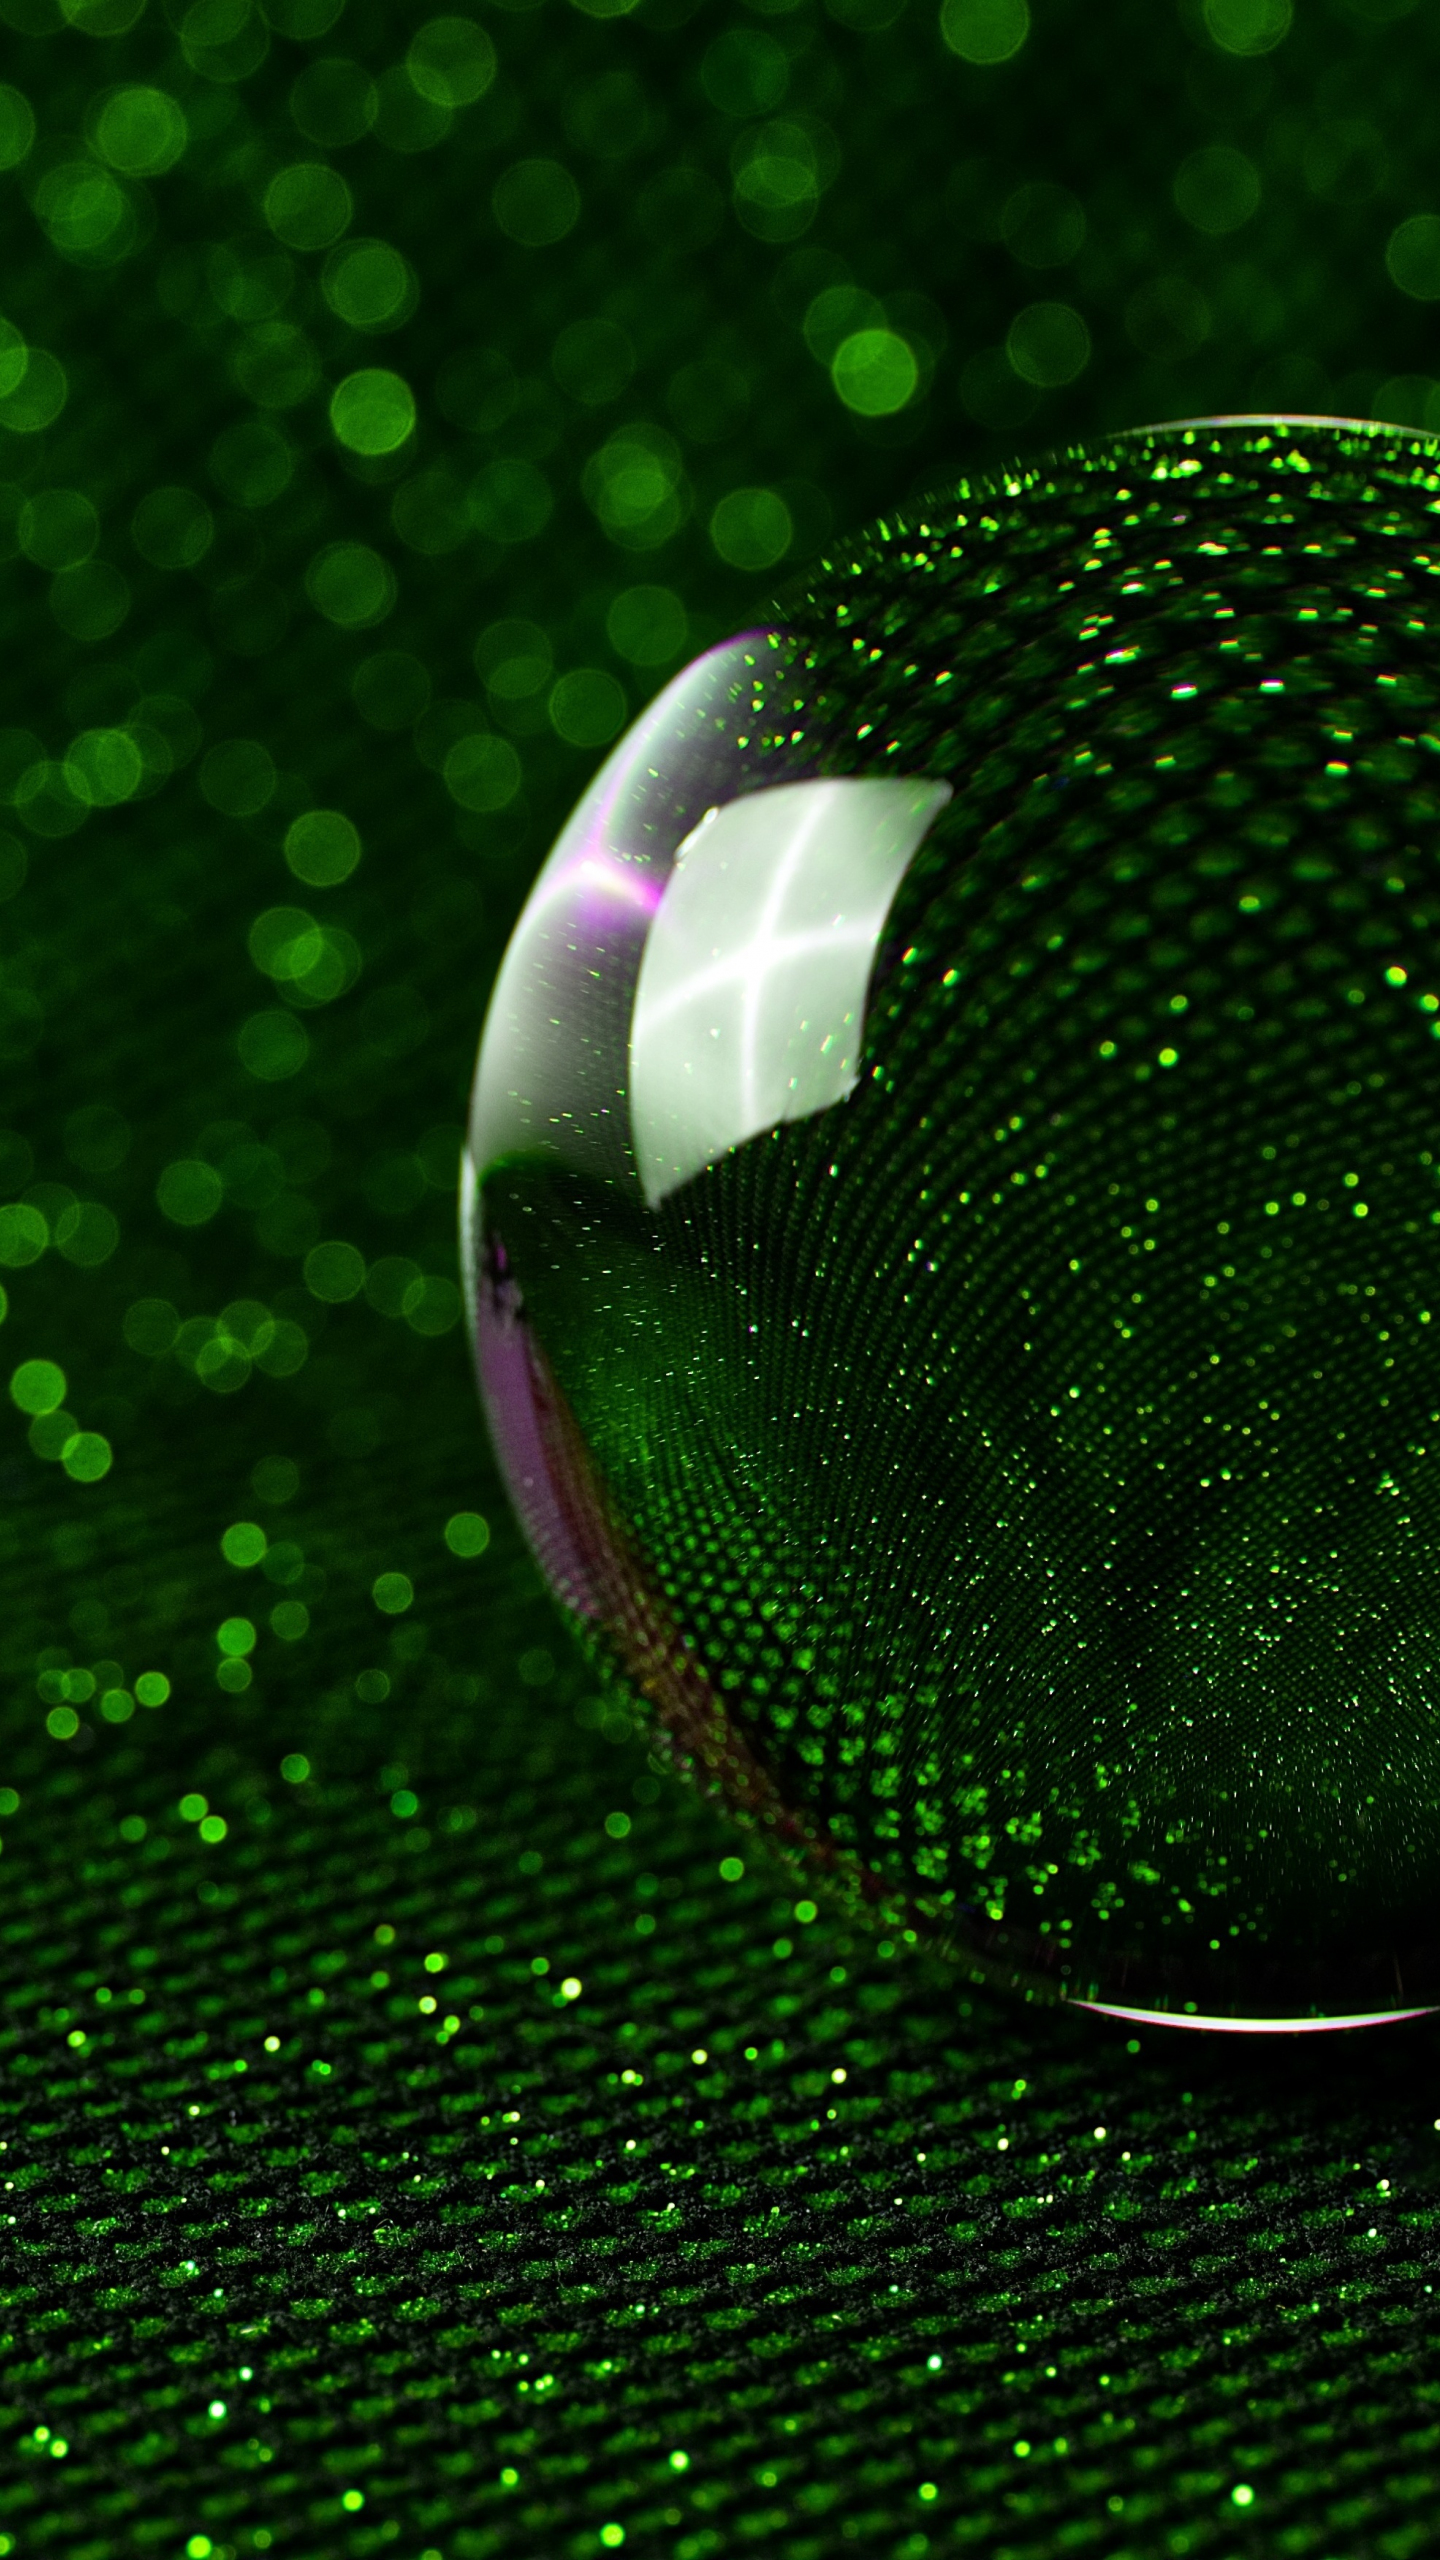 Download wallpaper 1440x2560 sphere, 3d, glass ball, green glitter, qhd  samsung galaxy s6, s7, edge, note, lg g4, 1440x2560 hd background, 21120